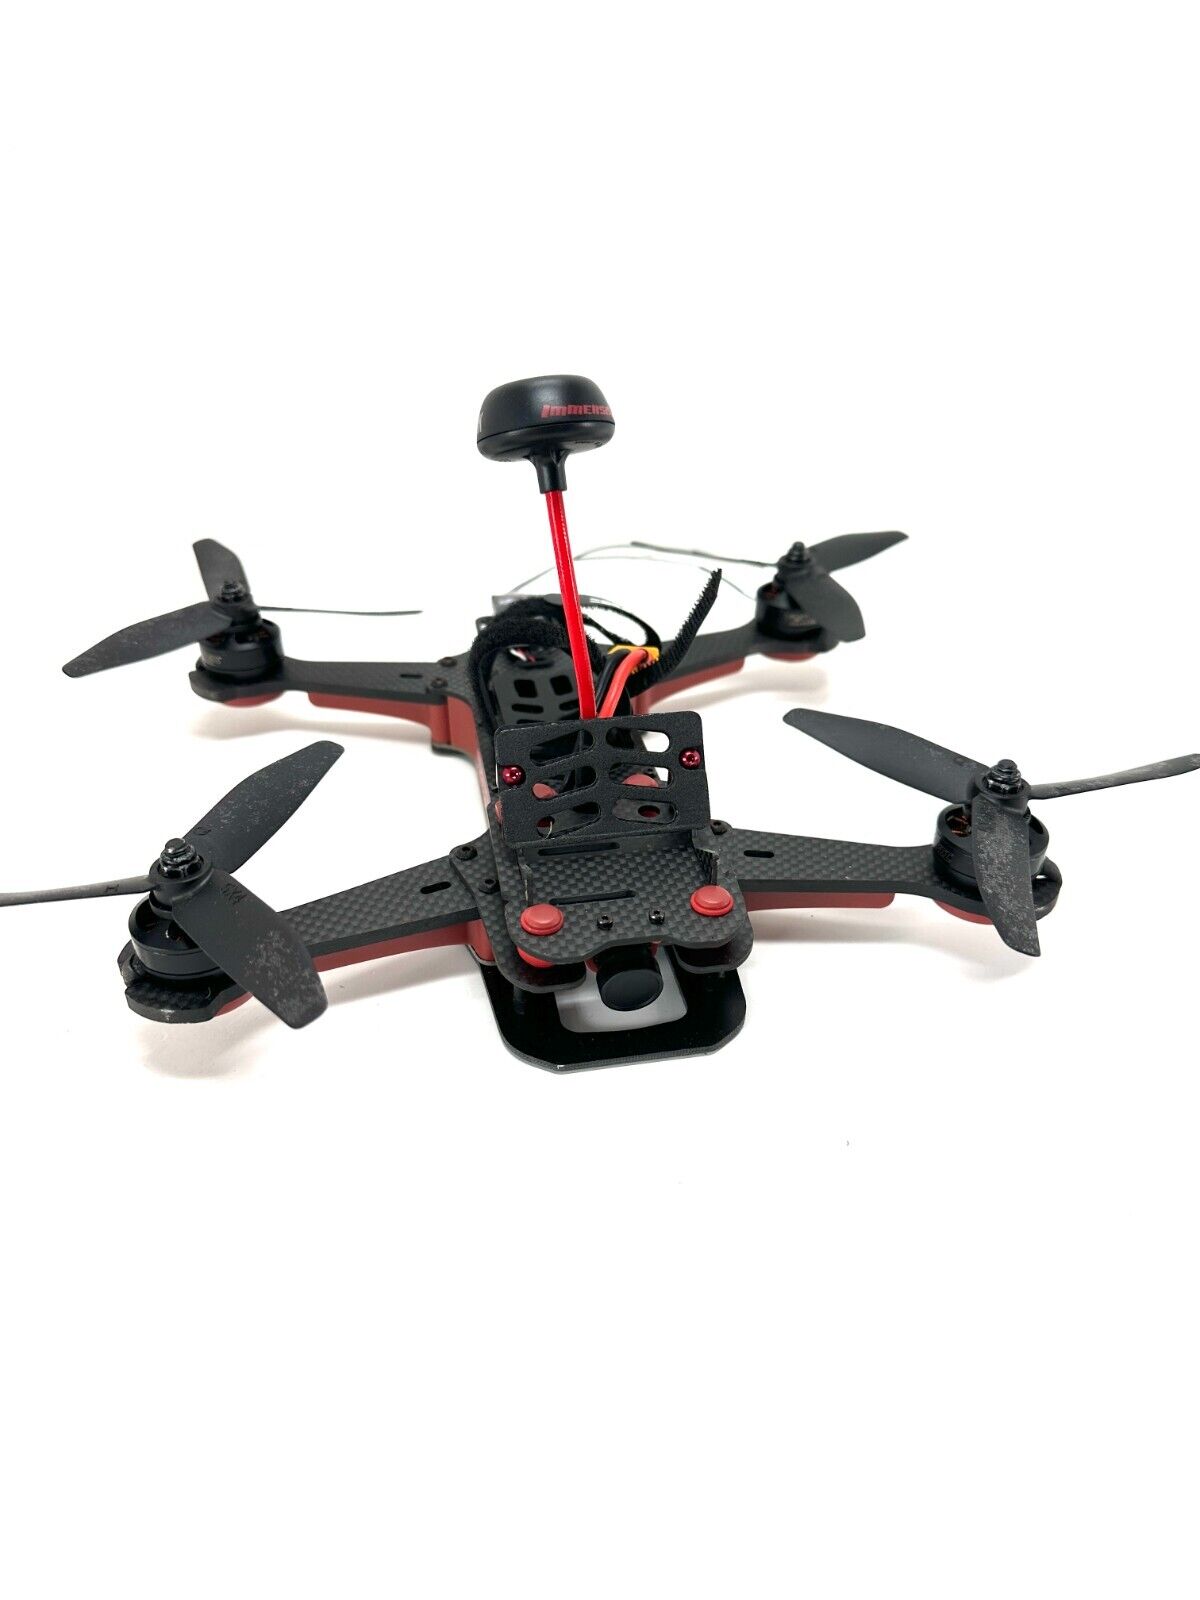 ImmersionRC Vortex 250 Racing / FPV / Freestyle drone